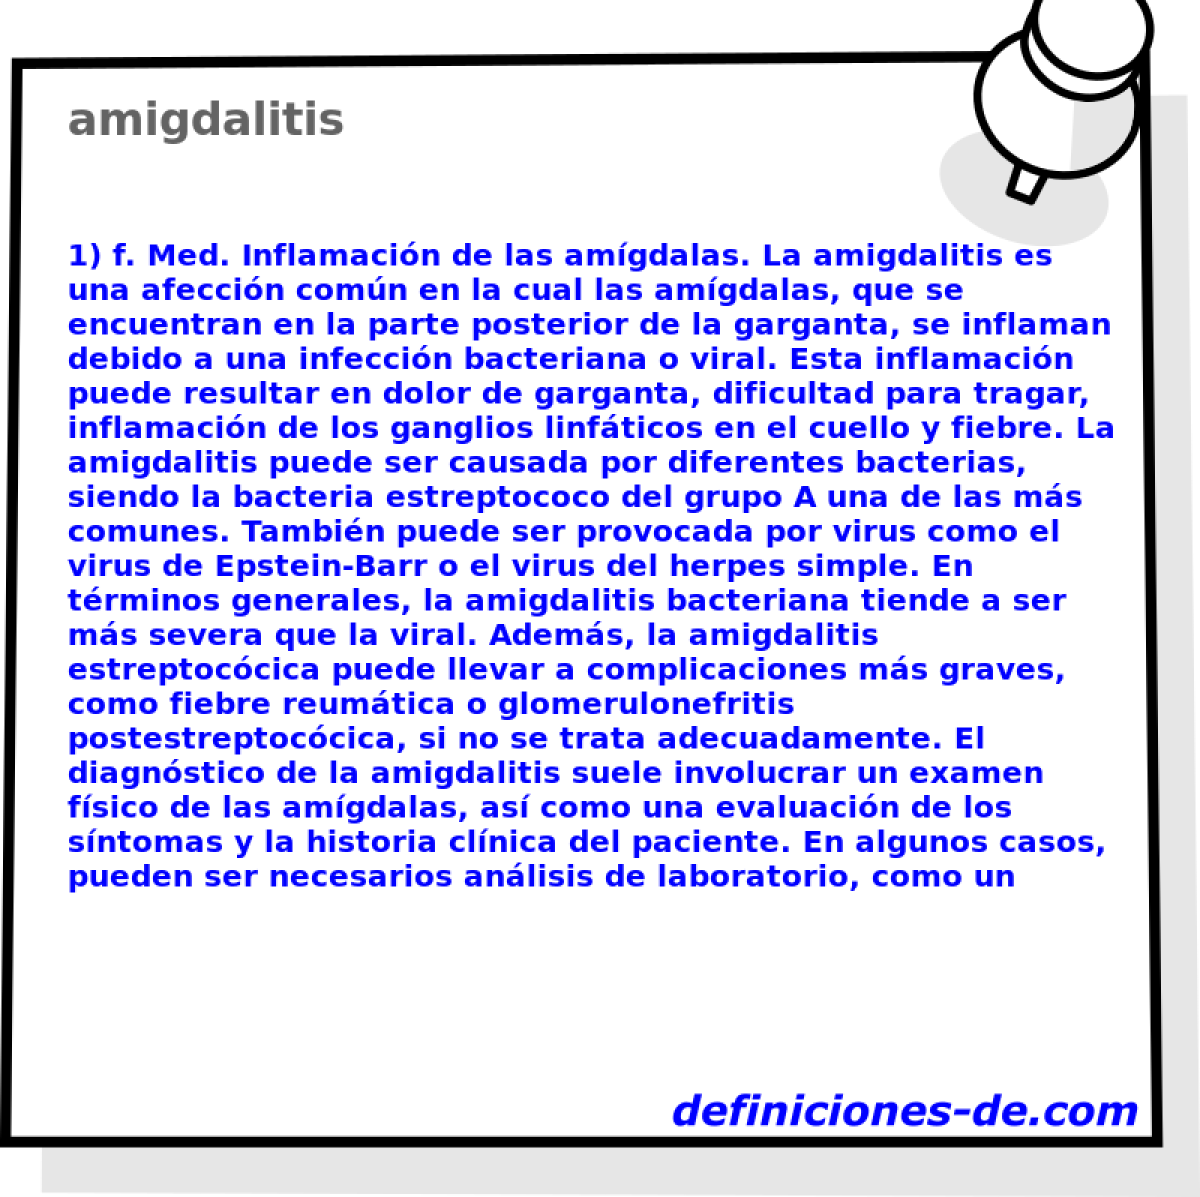 amigdalitis 